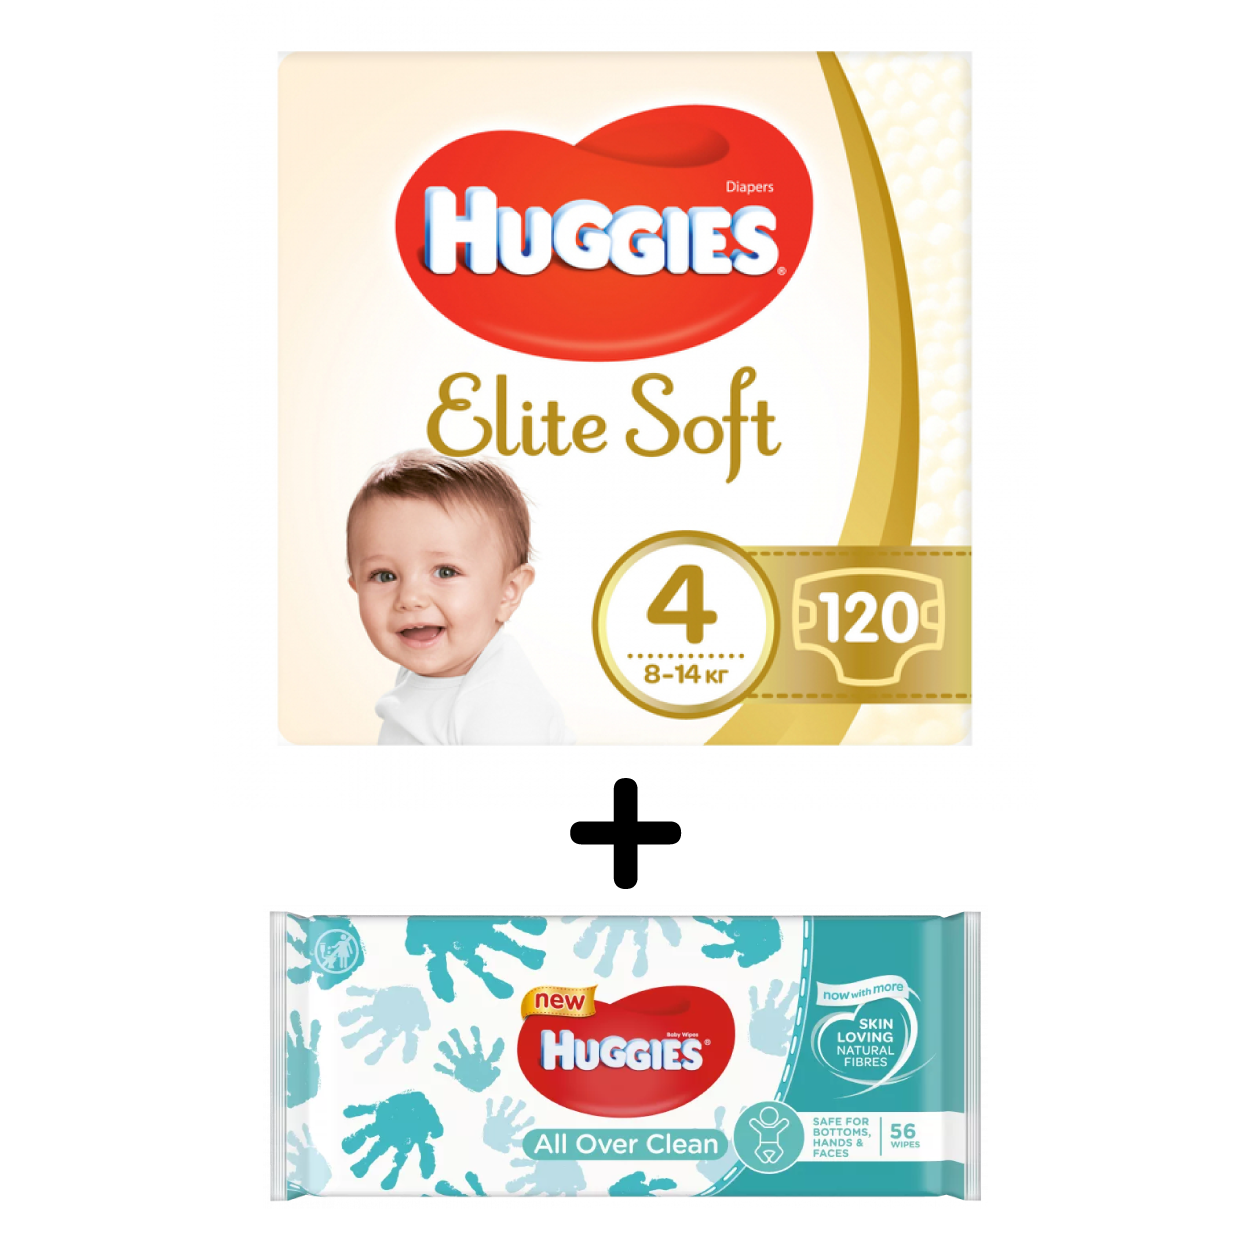 Набір Huggies: Підгузки Huggies Elite Soft 4 (8-14 кг), 120 шт. + Вологі серветки Huggies All Over Clean, 56 шт. - фото 1